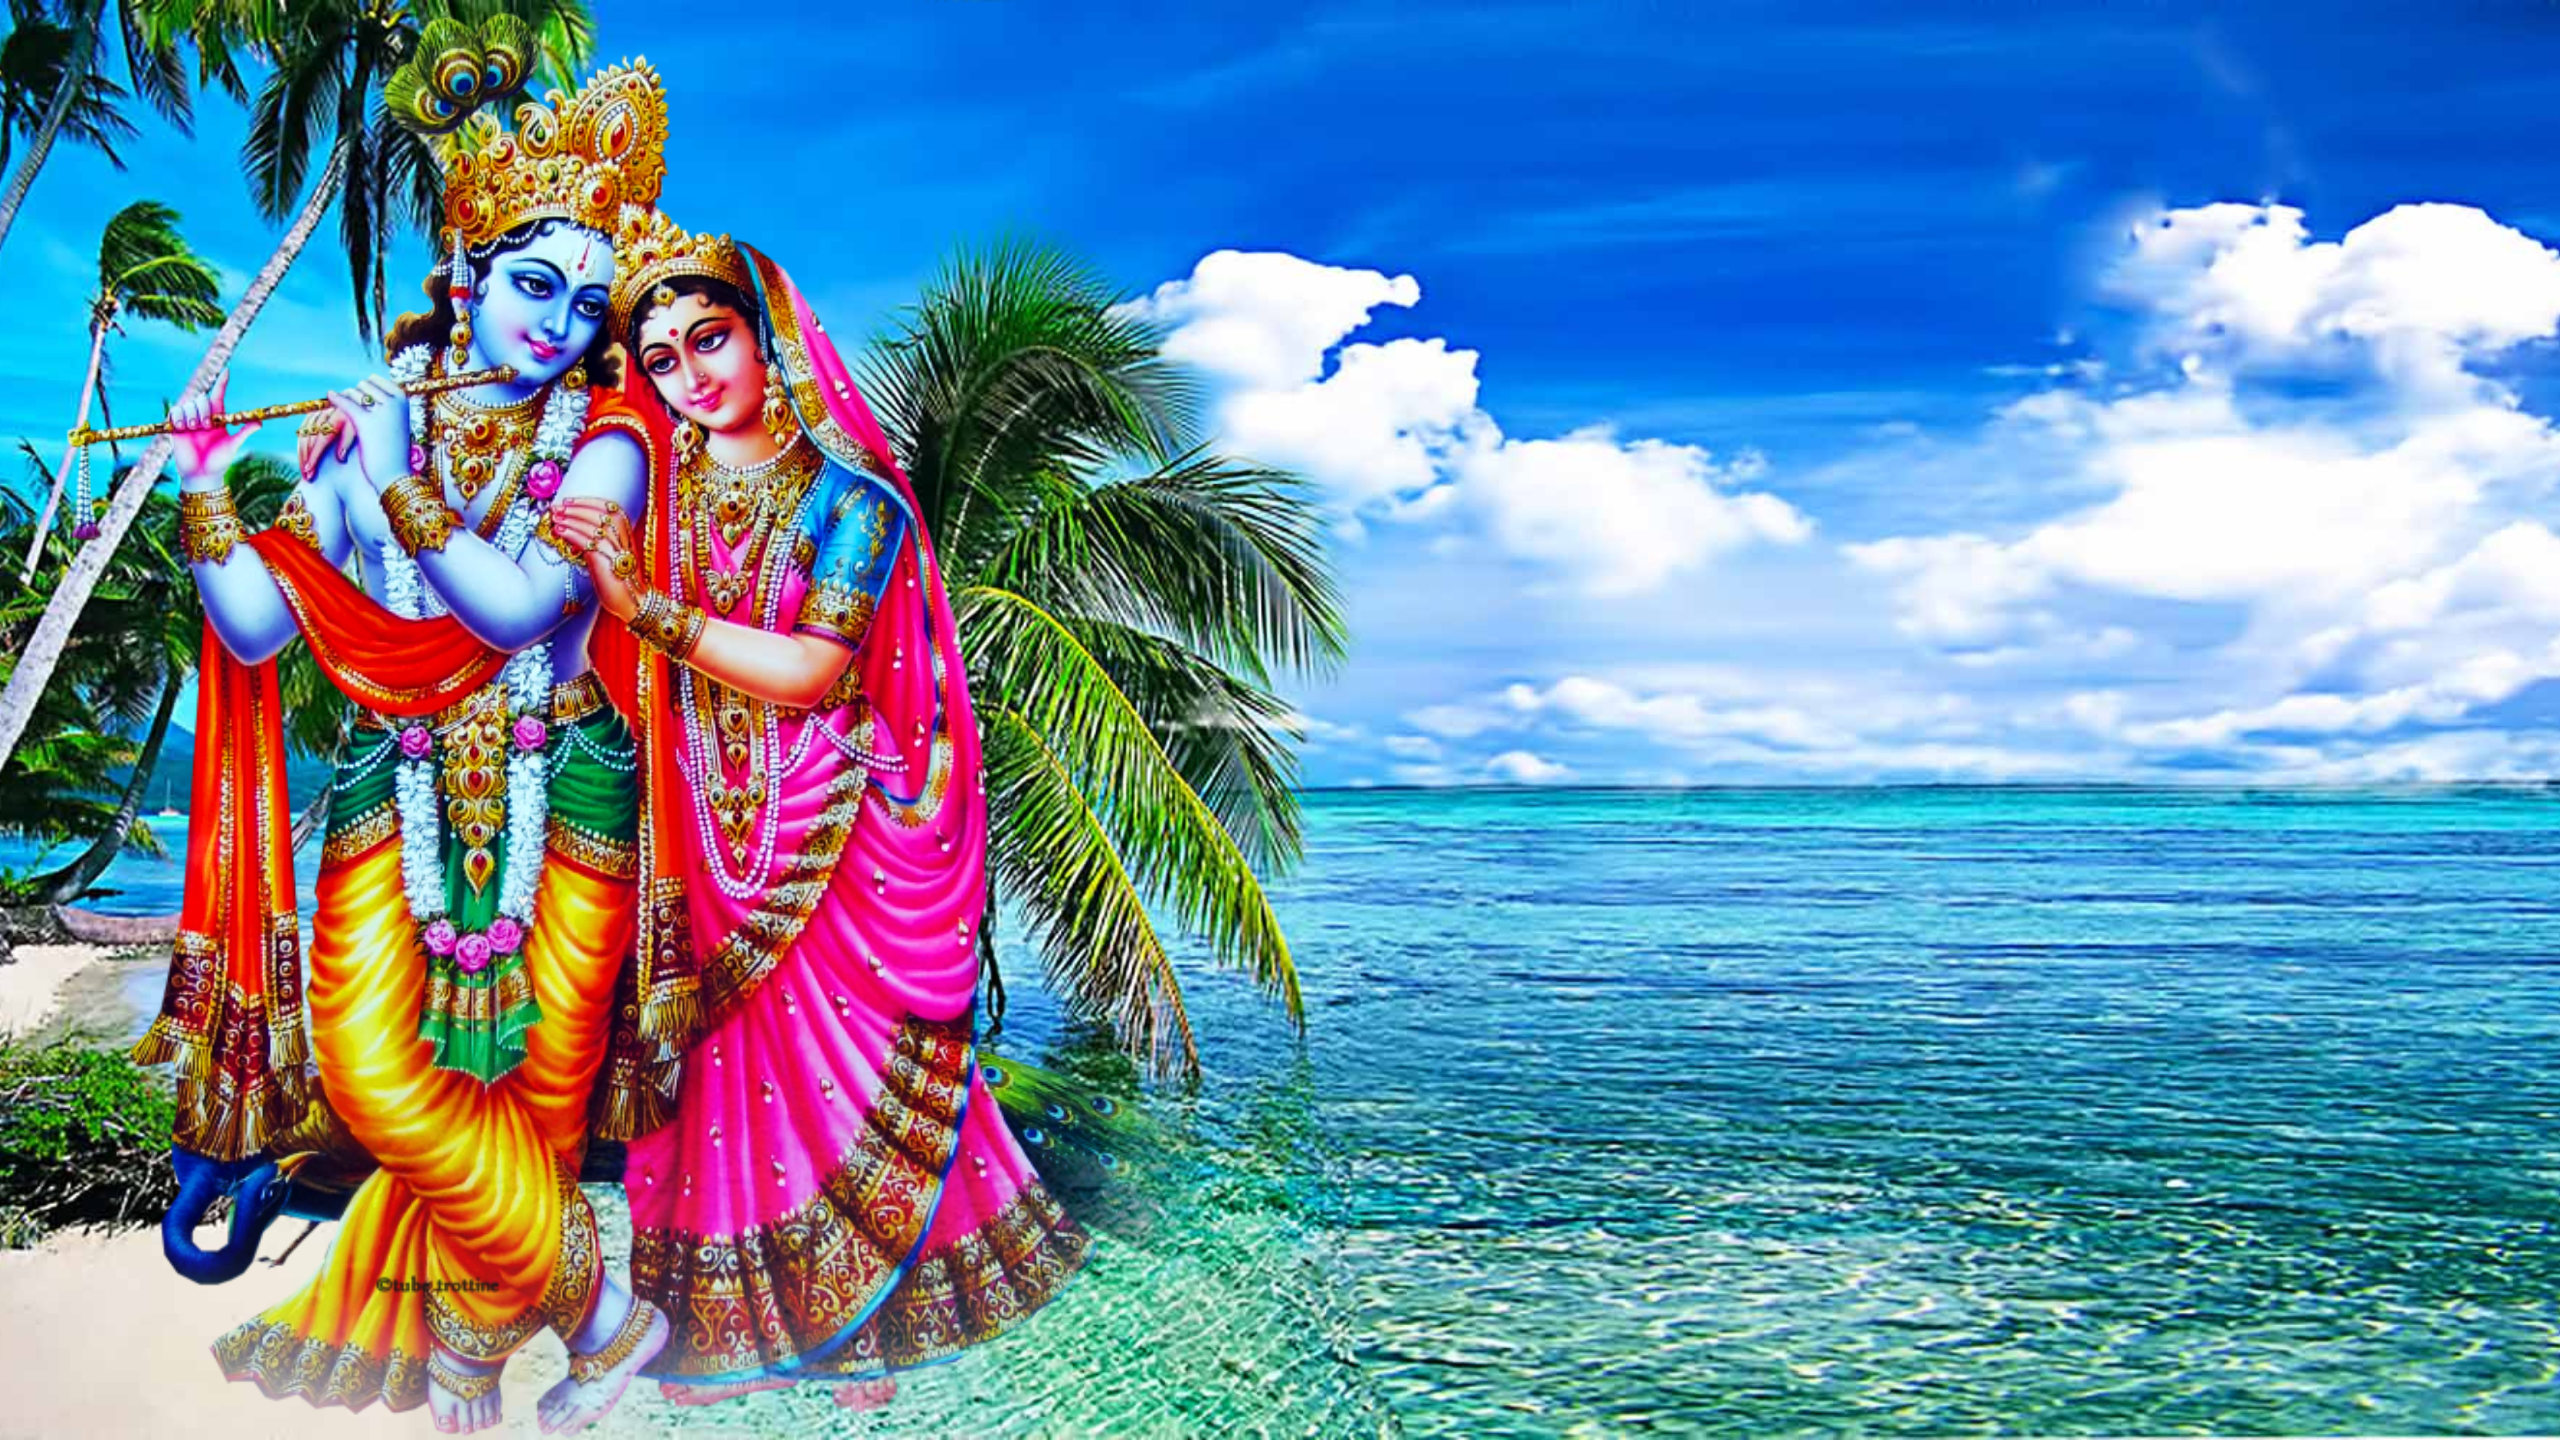 2,826 Radha Krishna Wallpaper Images, Stock Photos & Vectors | Shutterstock